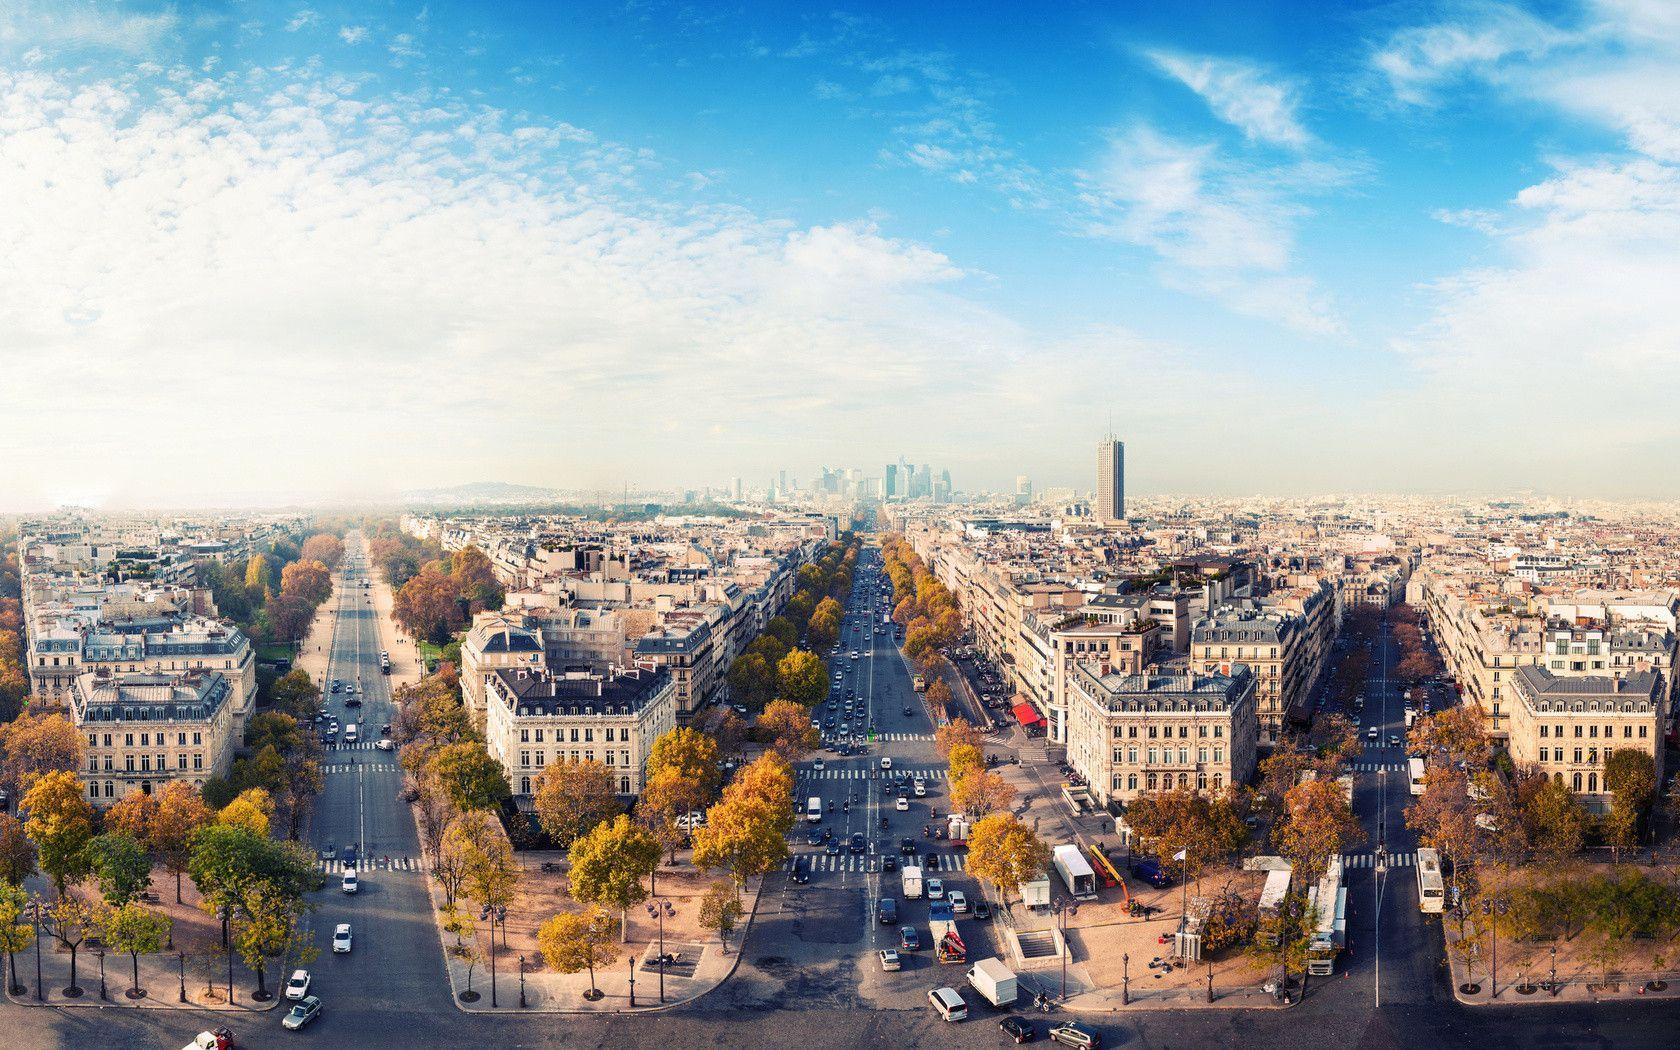 paris city HD wallpaper cool desktop image widescreen. Cool